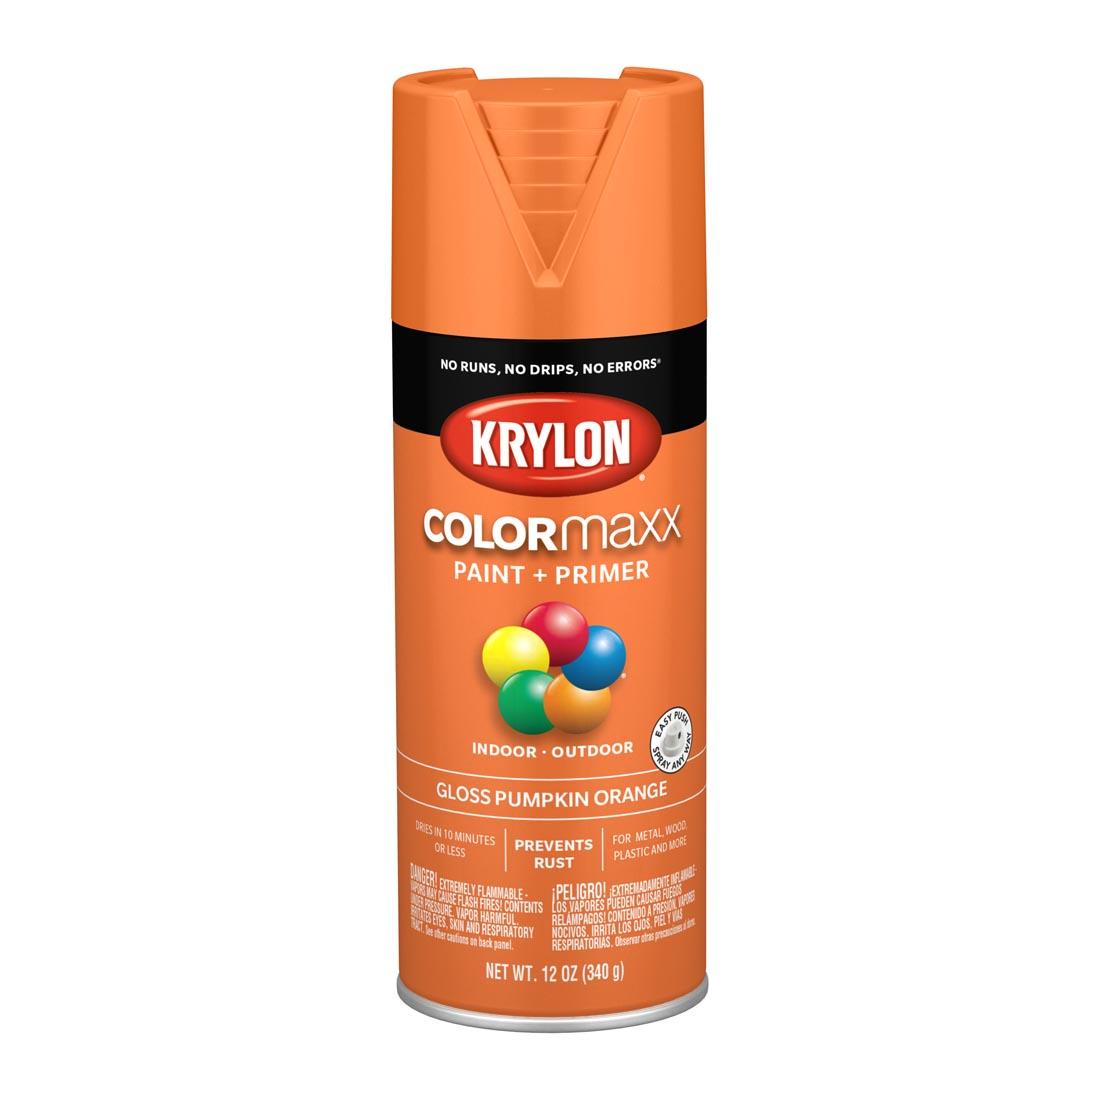 Gloss Pumpkin Orange Krylon COLORmaxx Paint + Primer Spray Paint